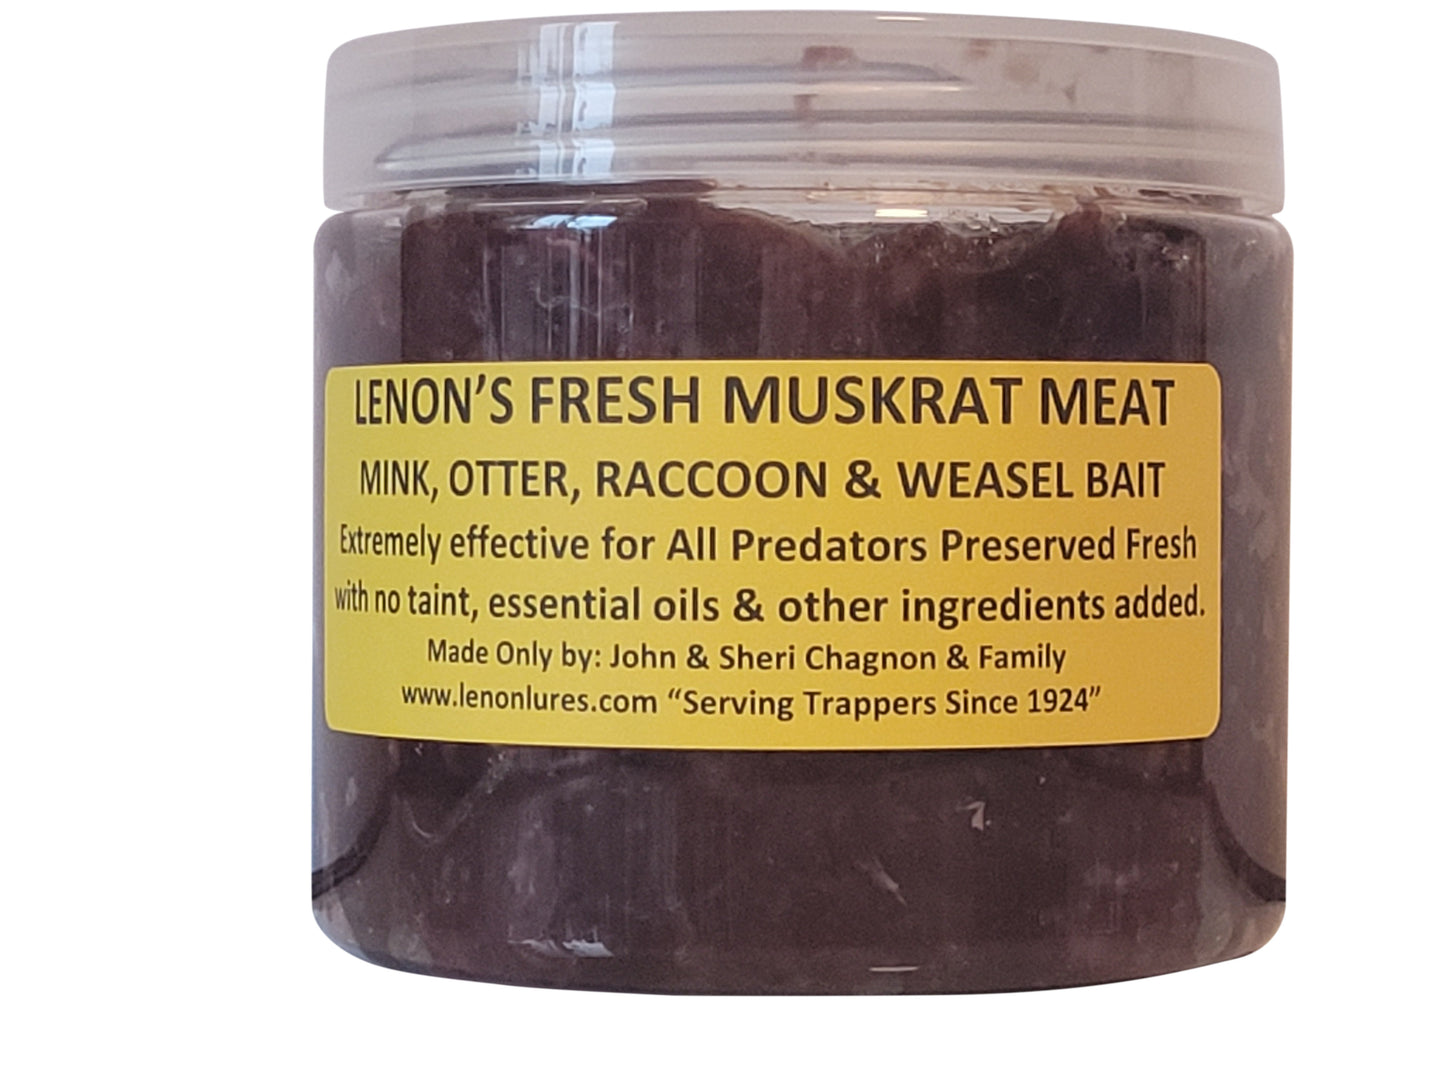 Lenon's Fresh Preserved Muskrat Meat Bait Especially for Weasel, Mink & Otter